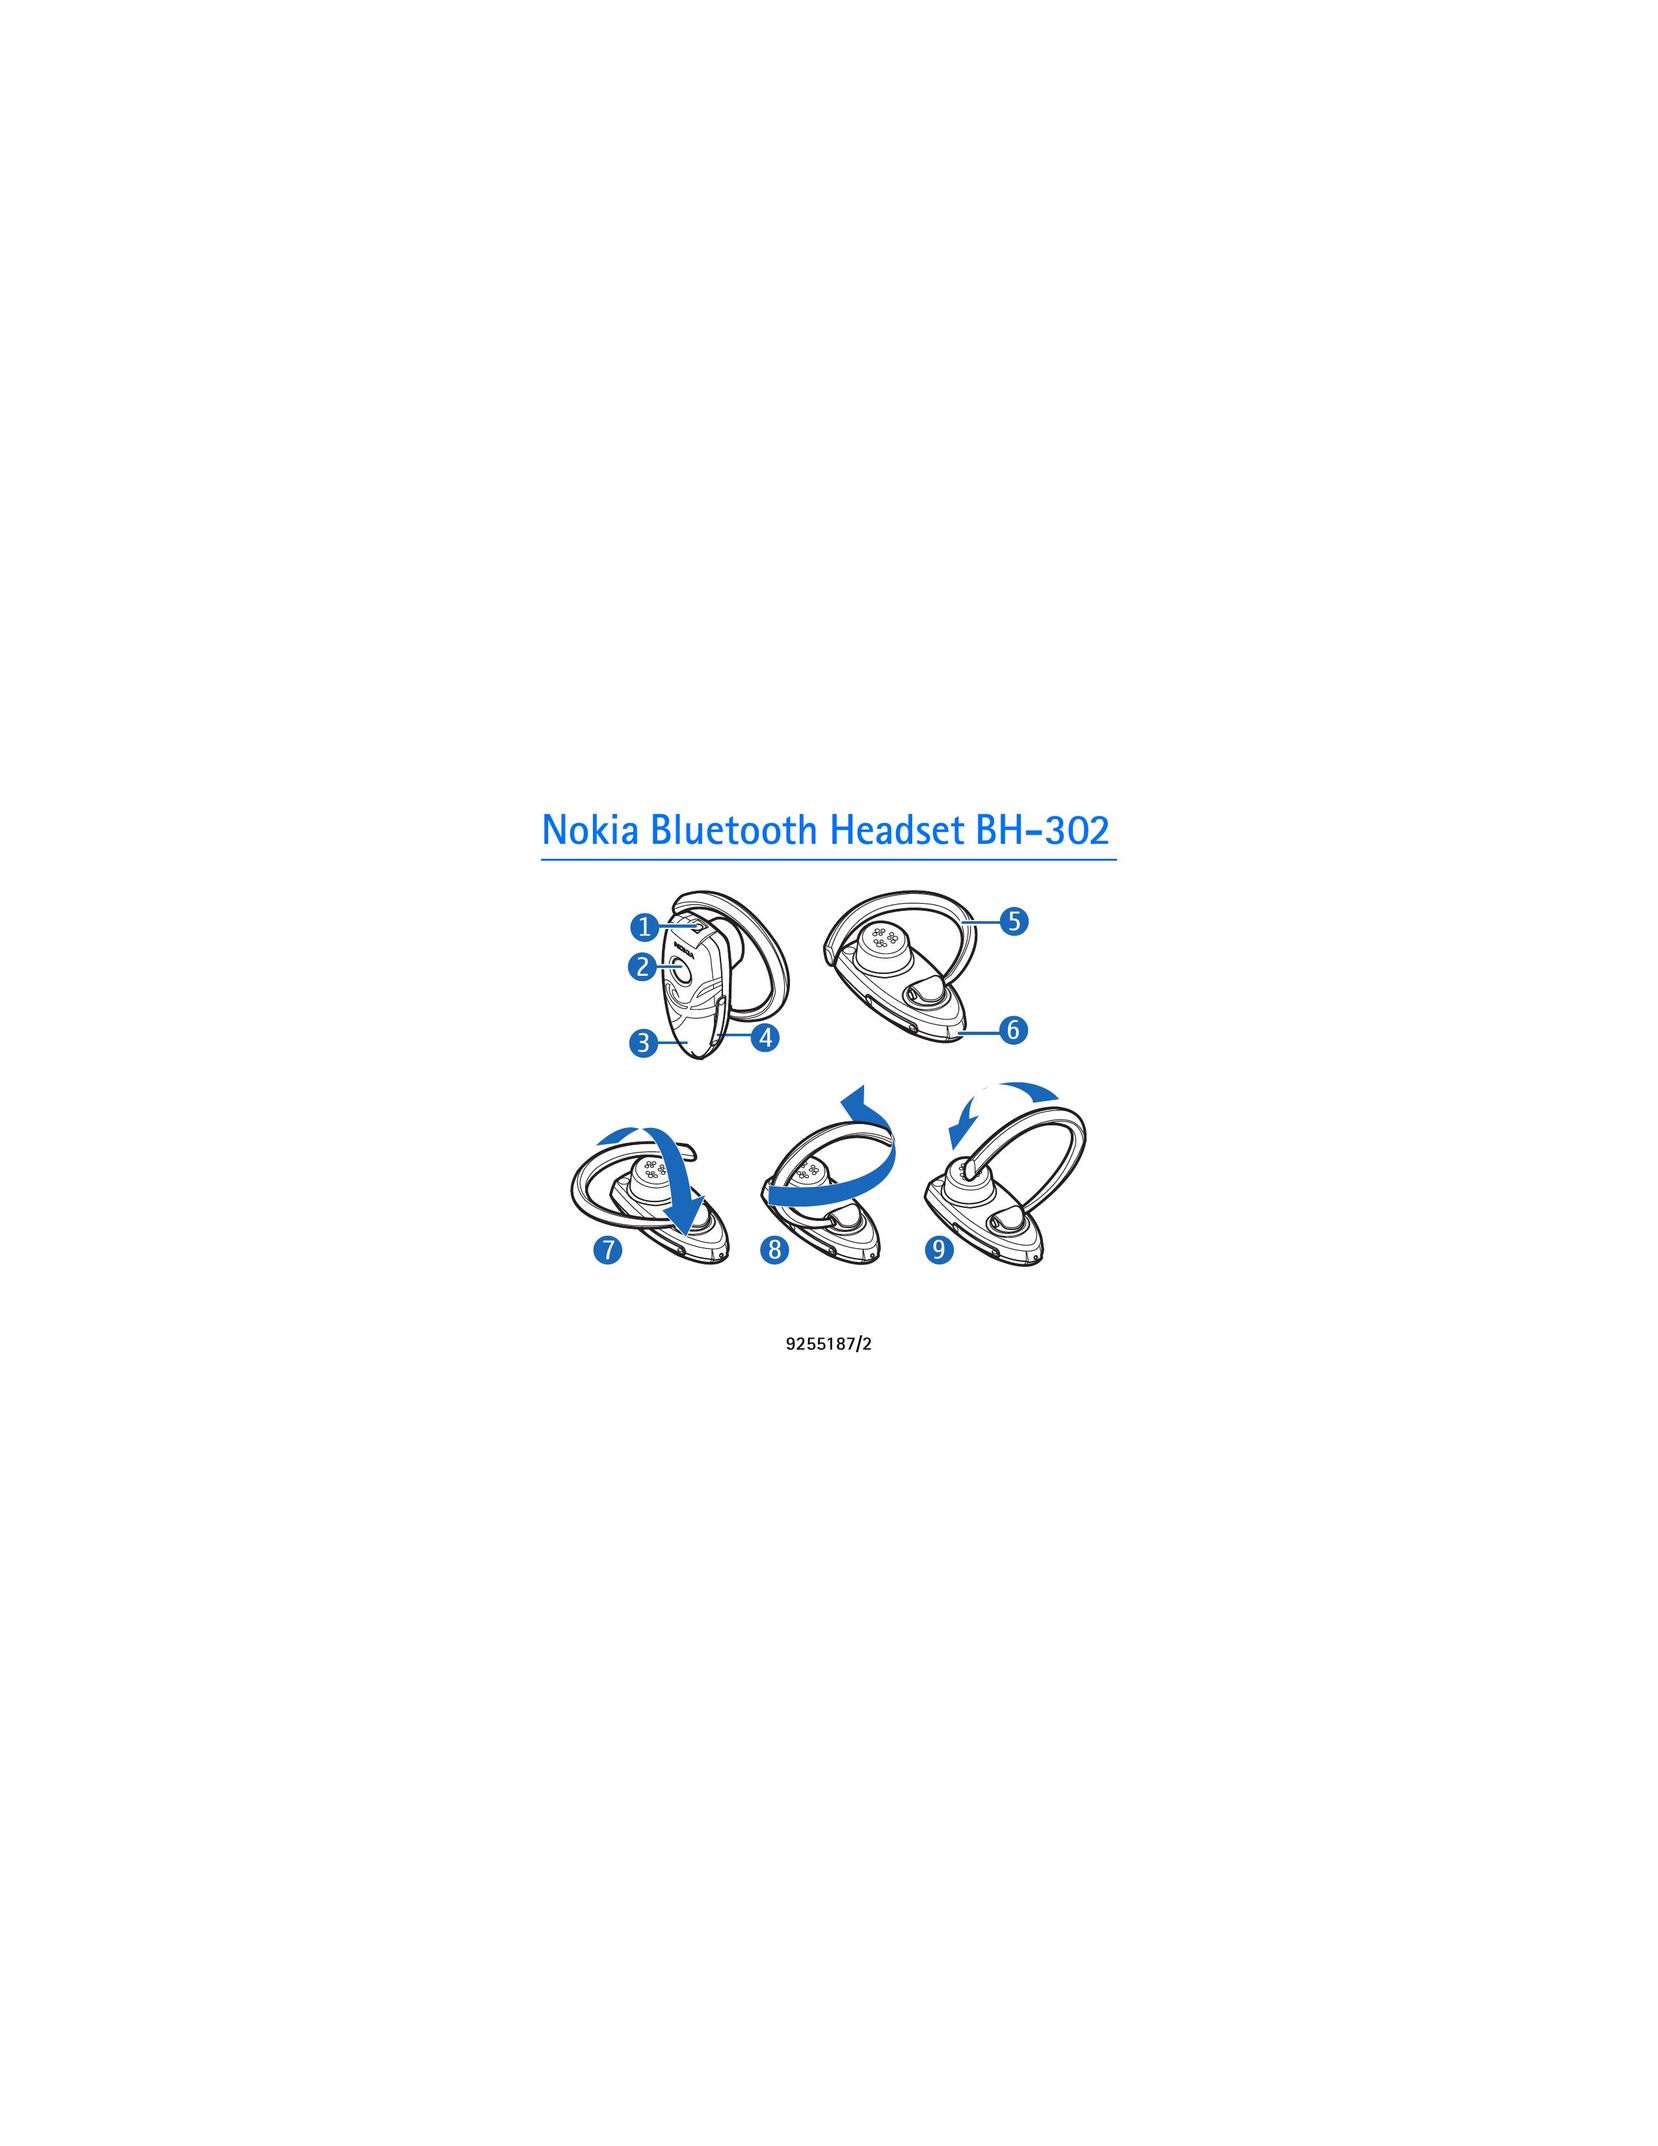 Nokia BH-302 Bluetooth Headset User Manual